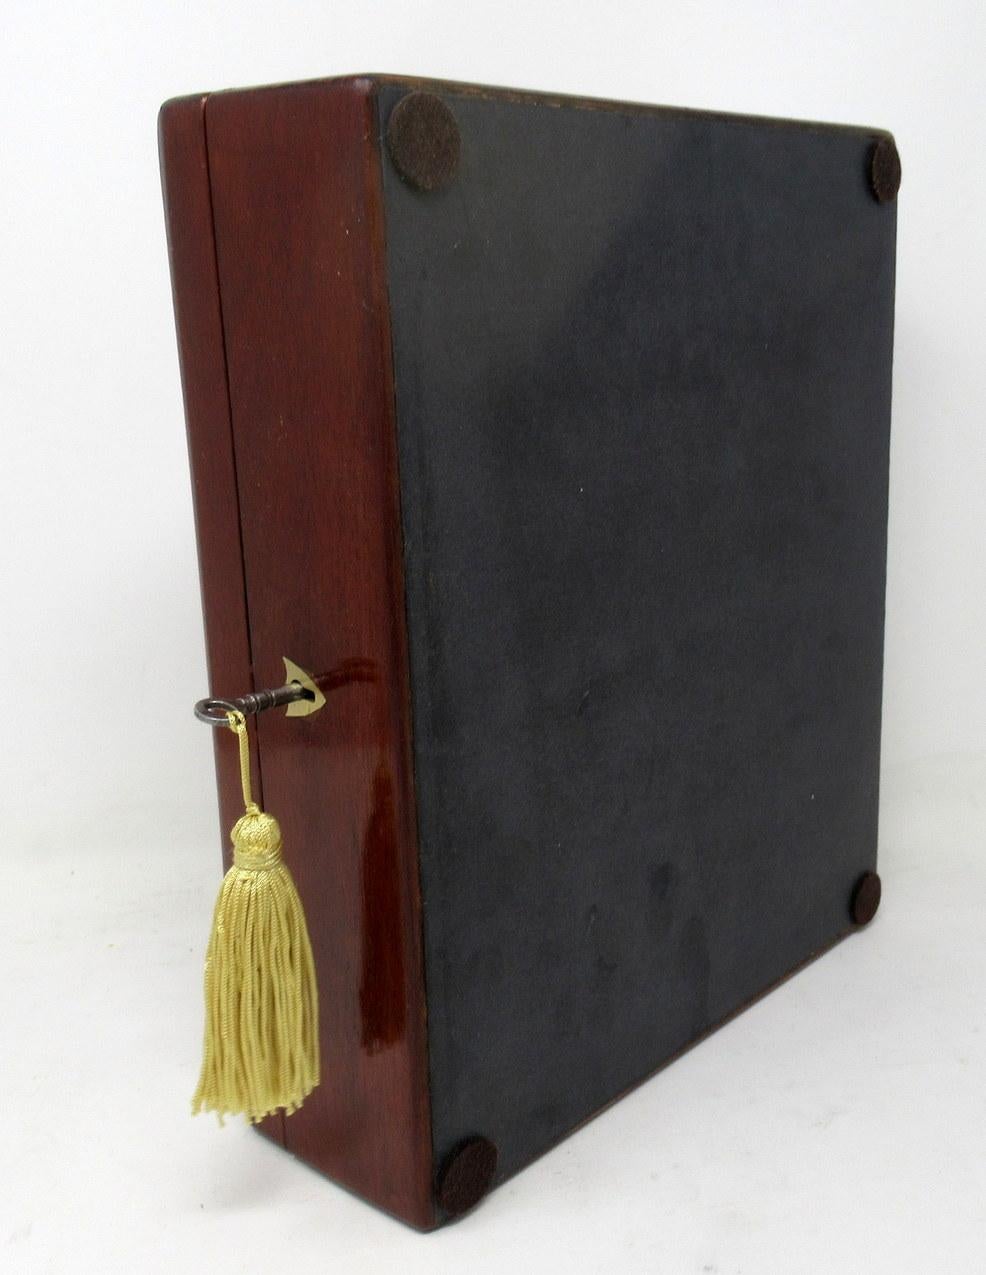 19th Century Antique Vintage Mahogany Wooden Jewelry or Gentleman's Cigar Box Casket